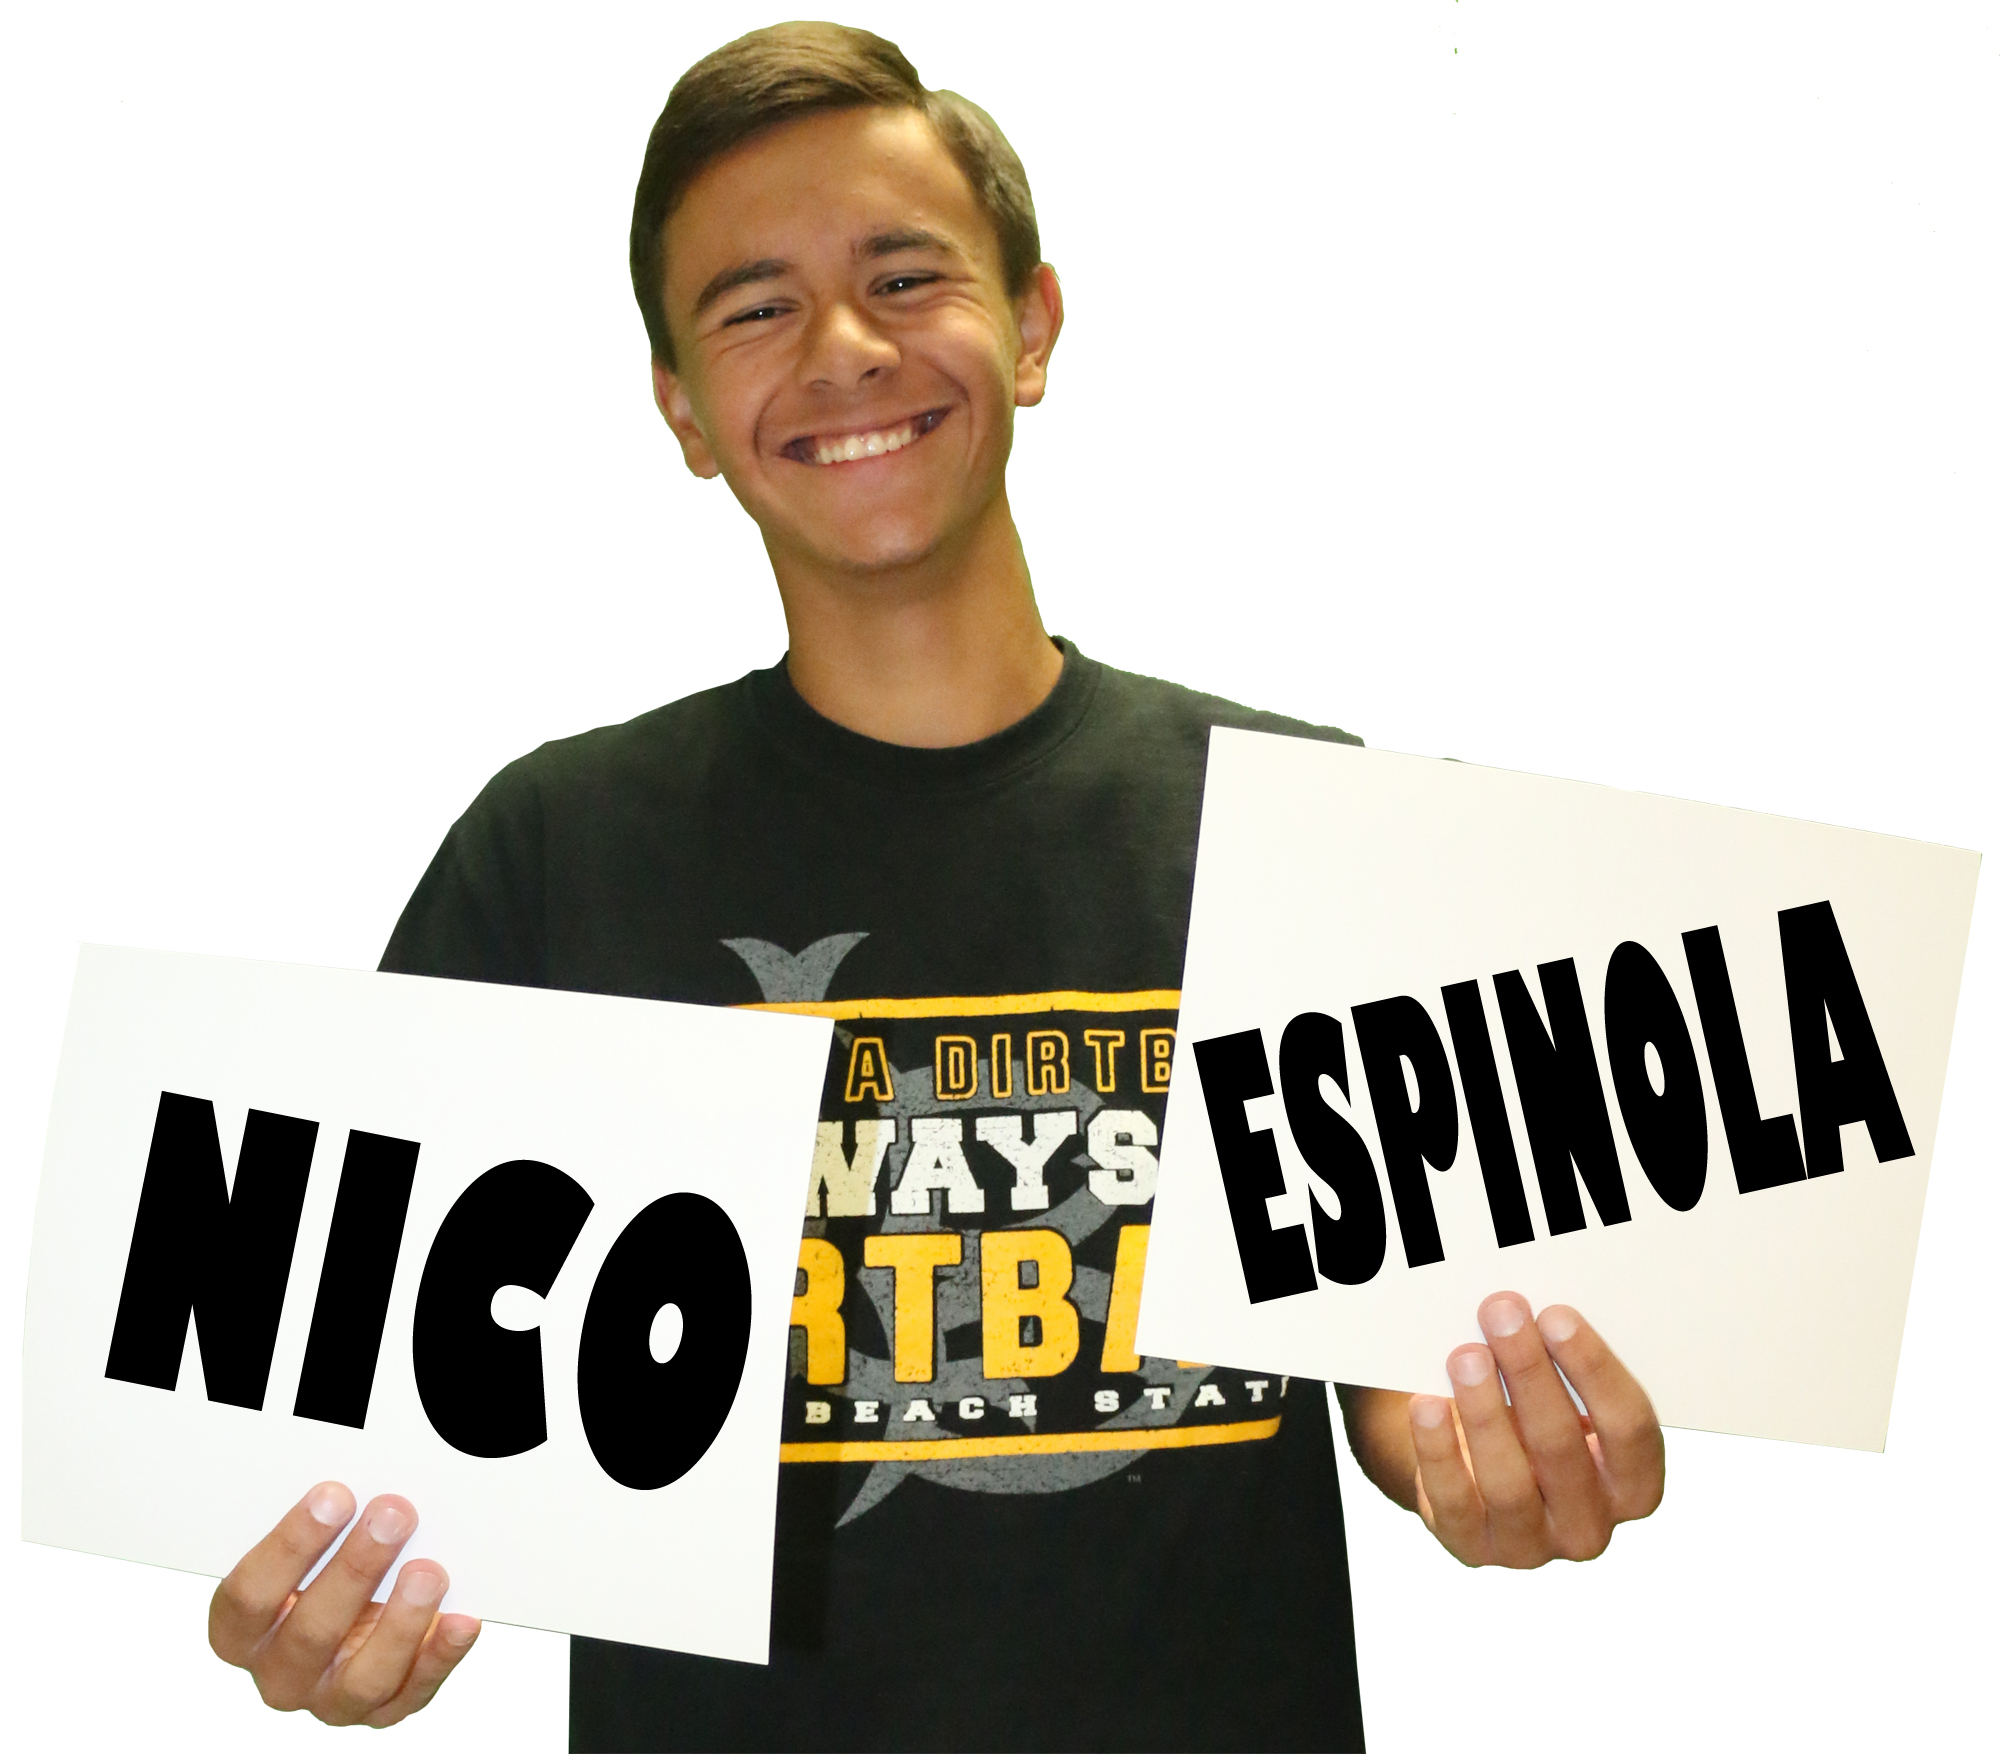 Nico Espinola, Student Life Editor